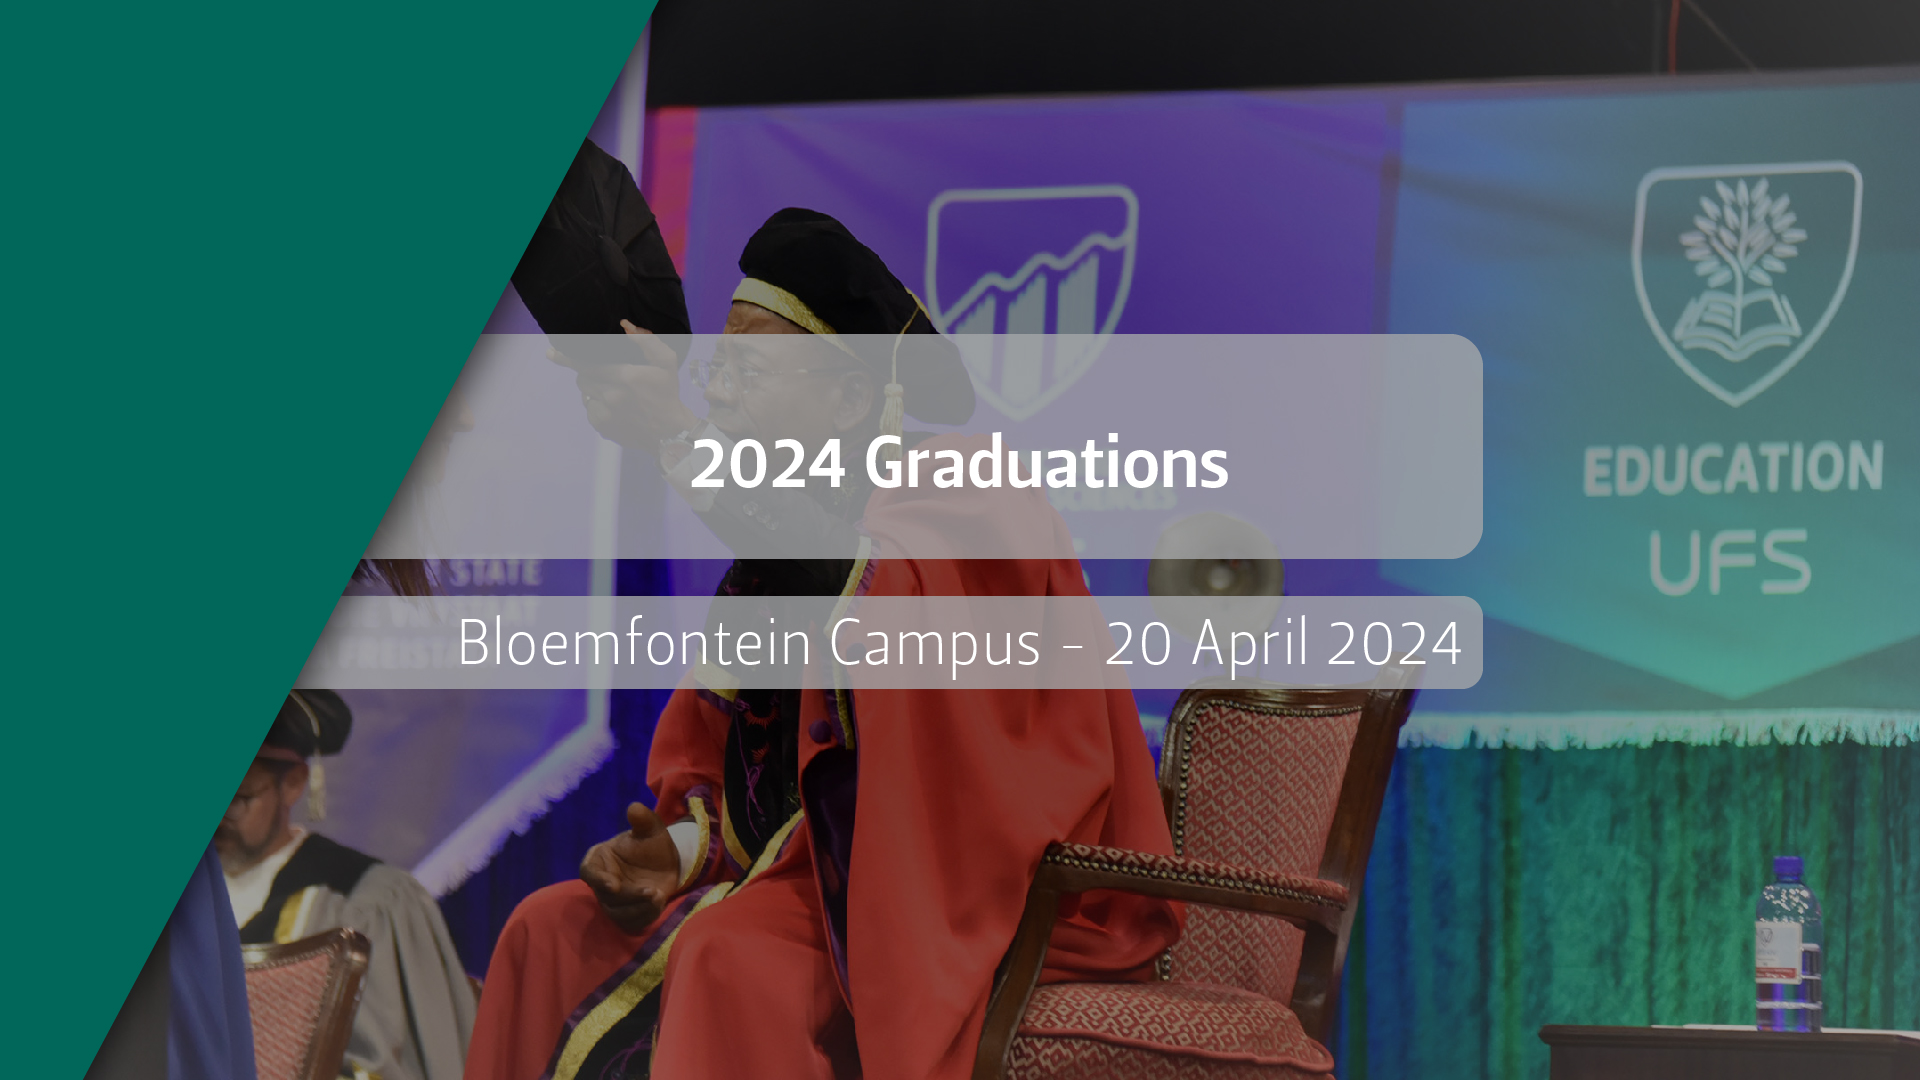 UFS Graduation 2024 - 20 April 2024